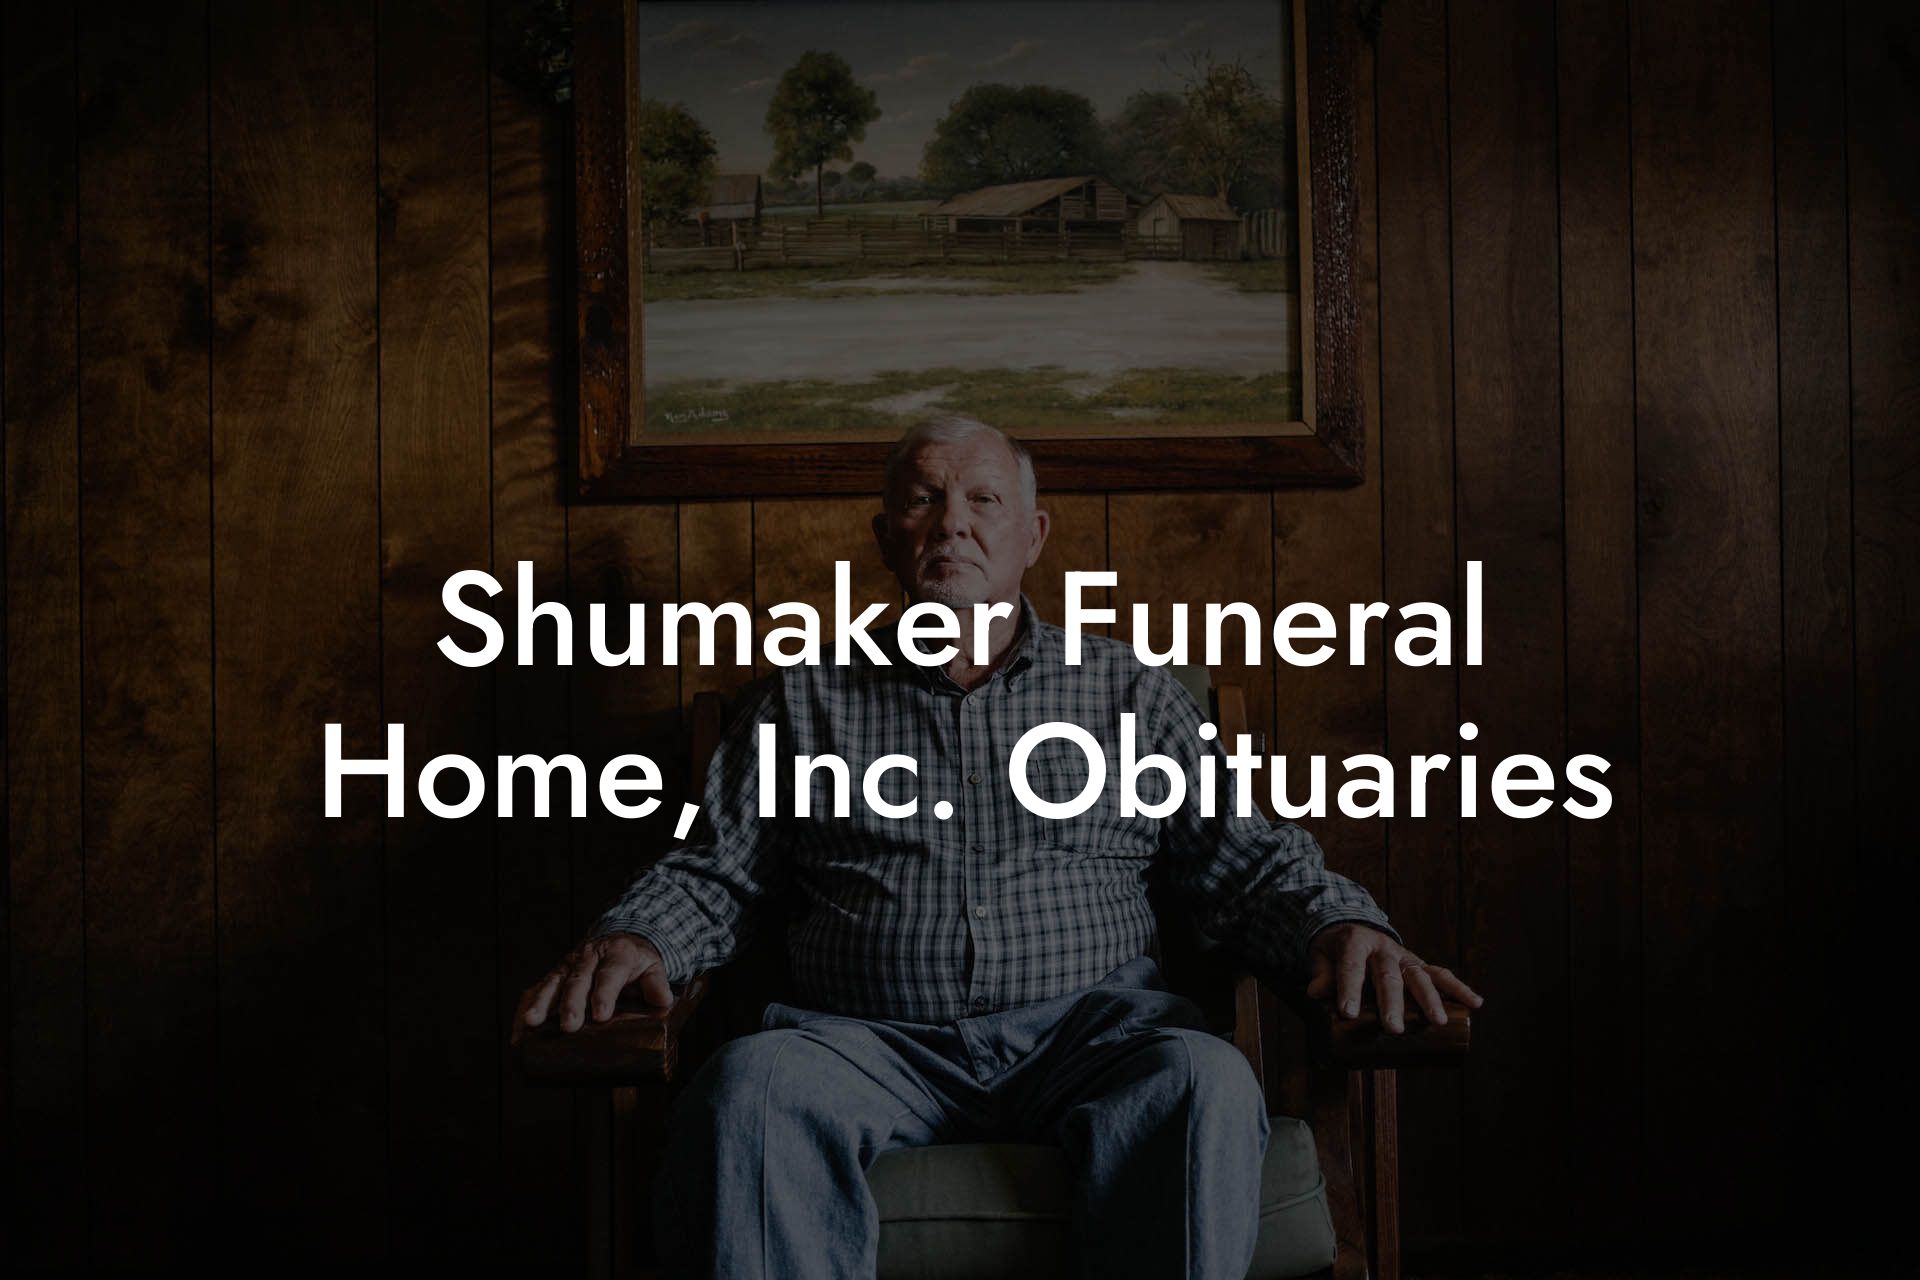 Shumaker Funeral Home, Inc. Obituaries